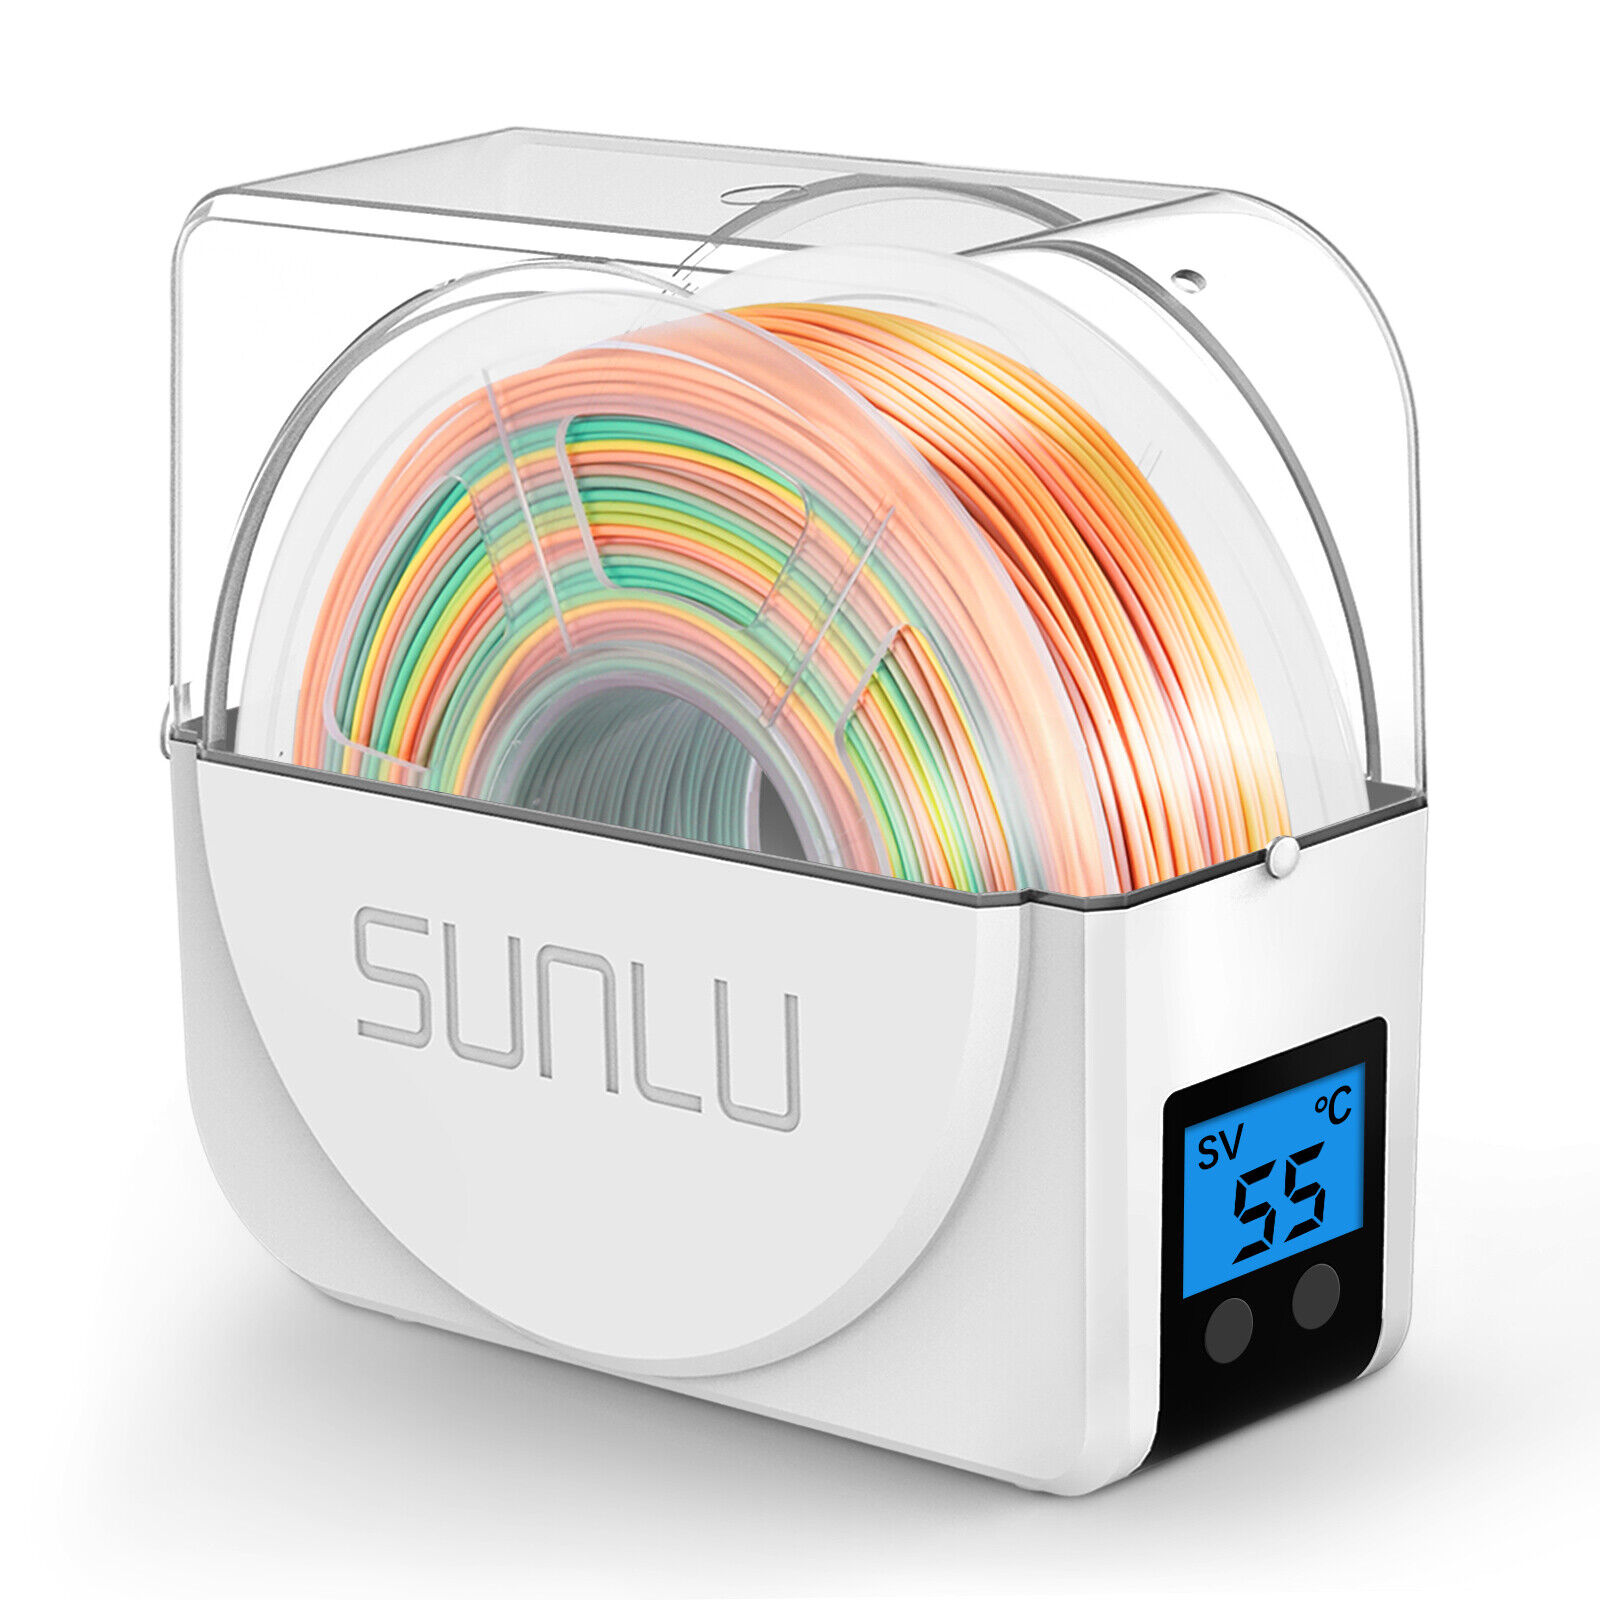 Sunlu 3D Printing Filament Box Dryer Storage Holder Keeping 